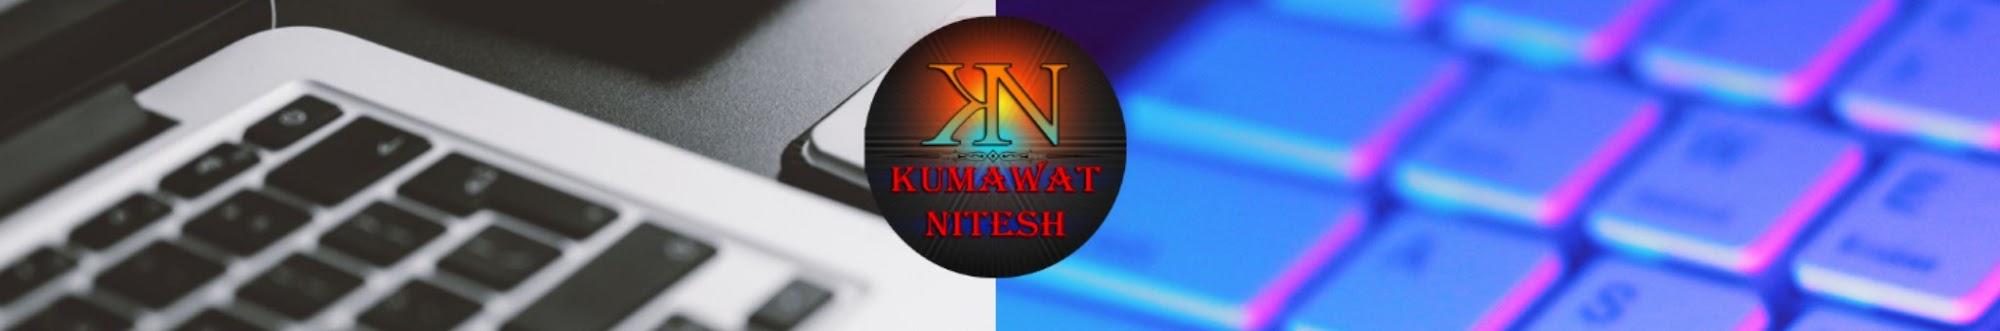 Kumawat Nitesh